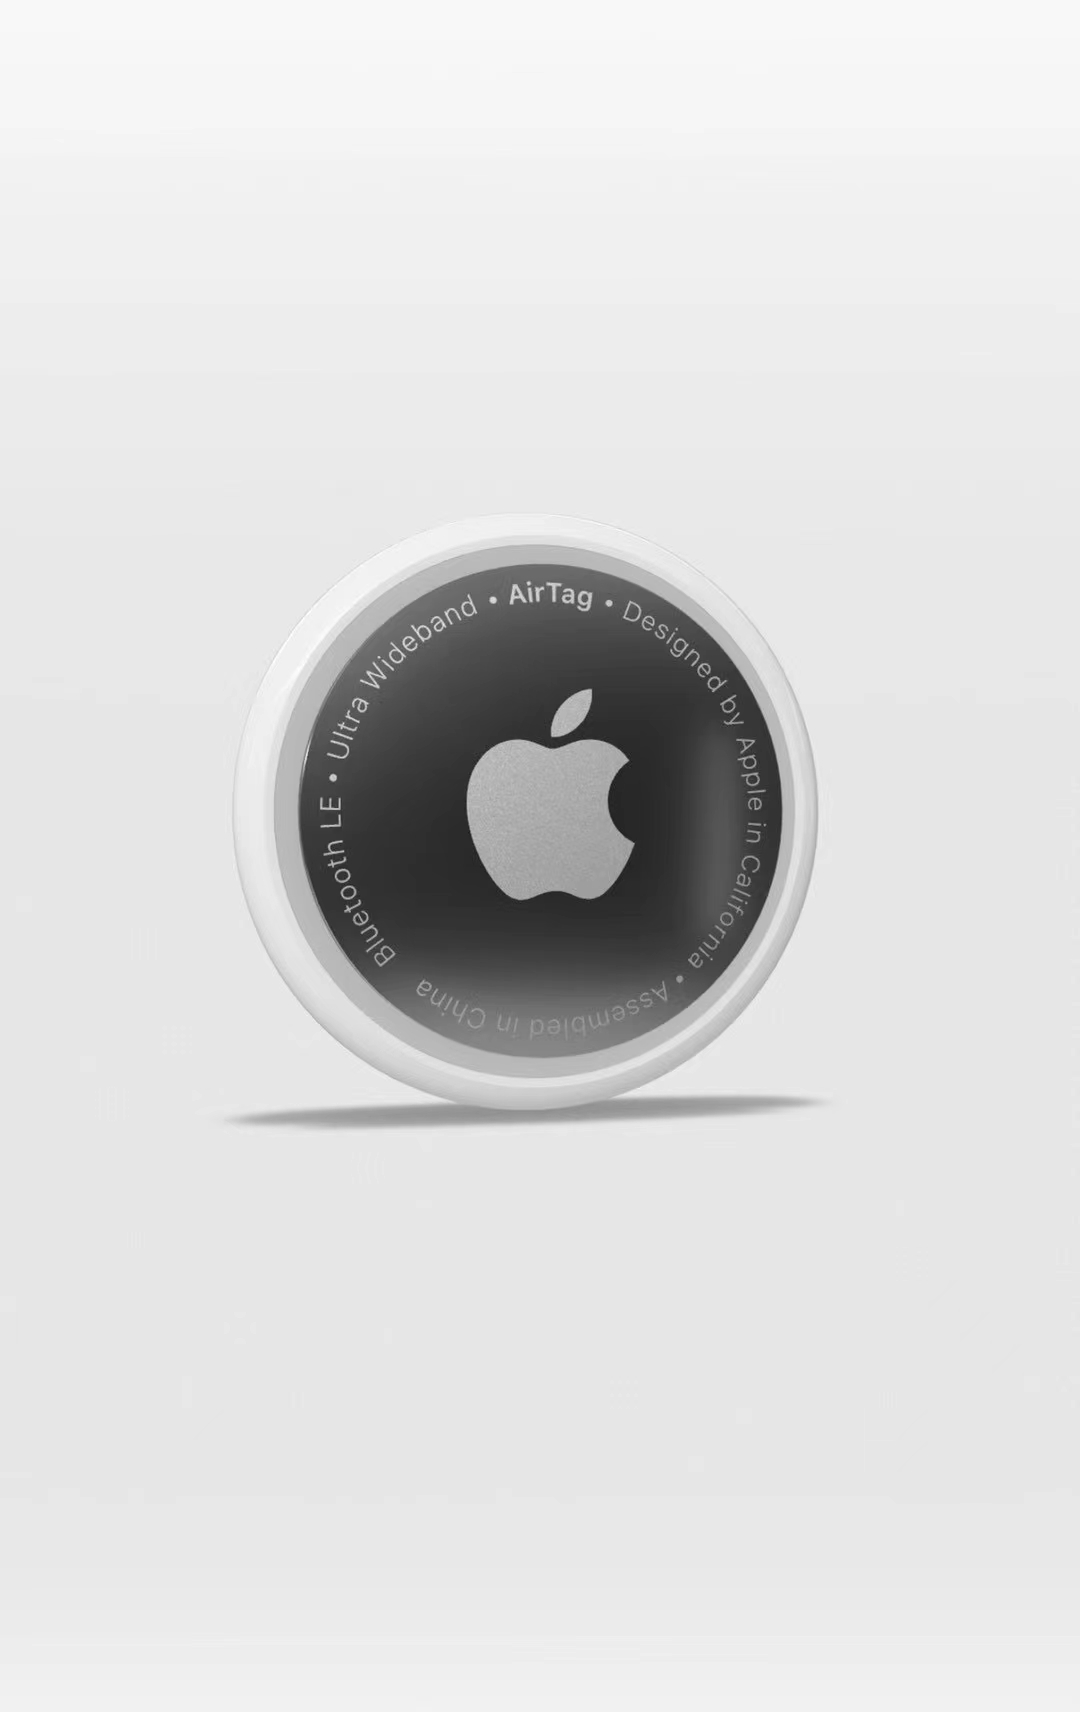 Apple's AirTag wireless tracker